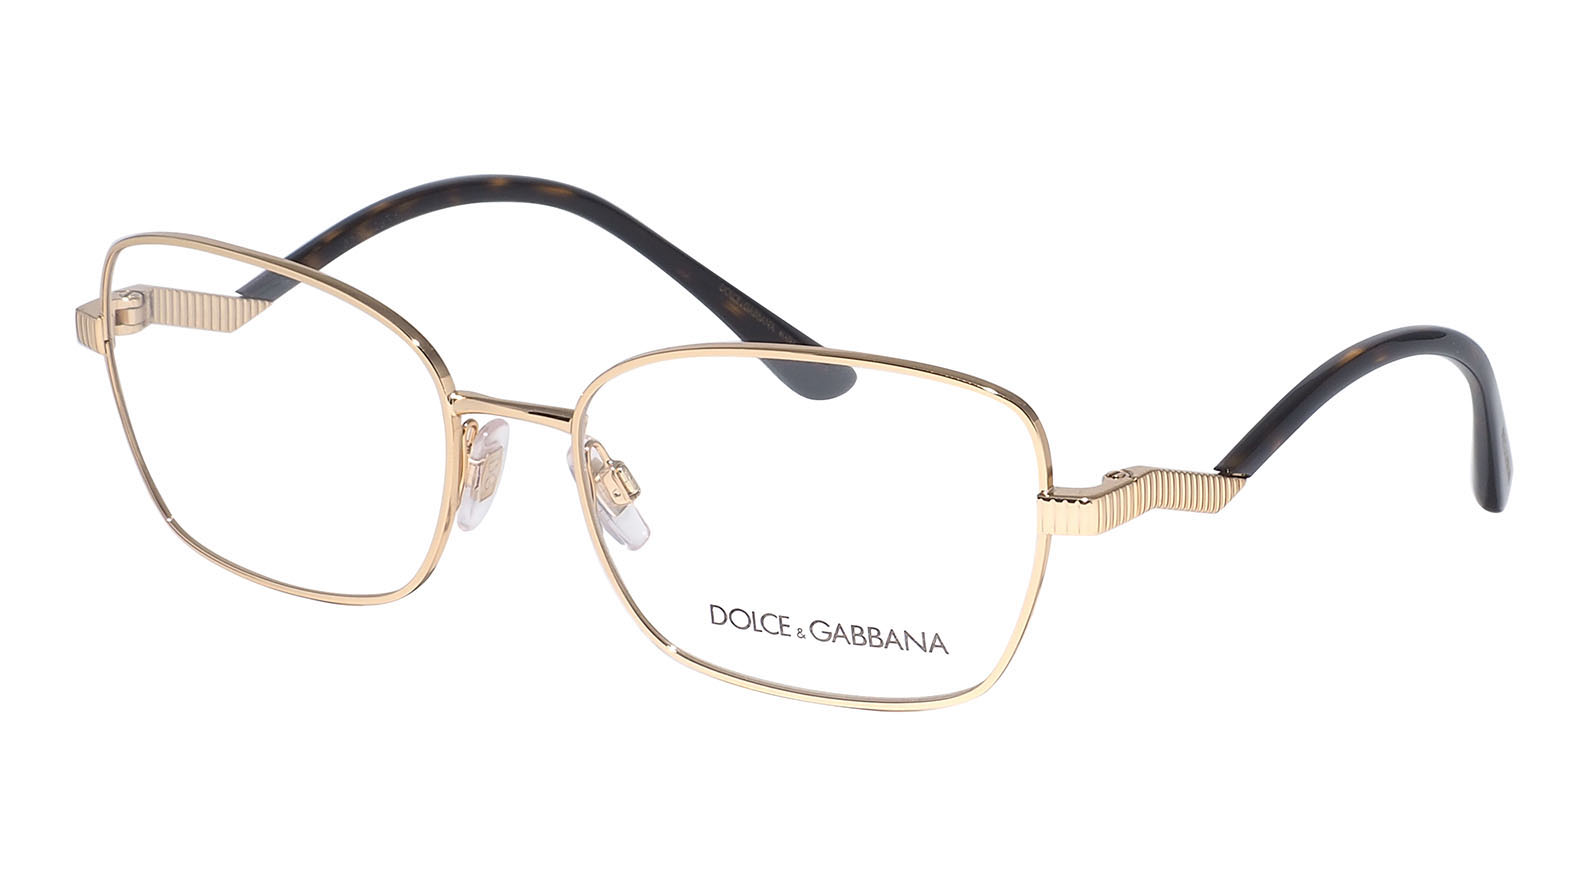 Dolce&Gabbana 1334 02 брелок металл морской конёк страза микс 4 5х2 см